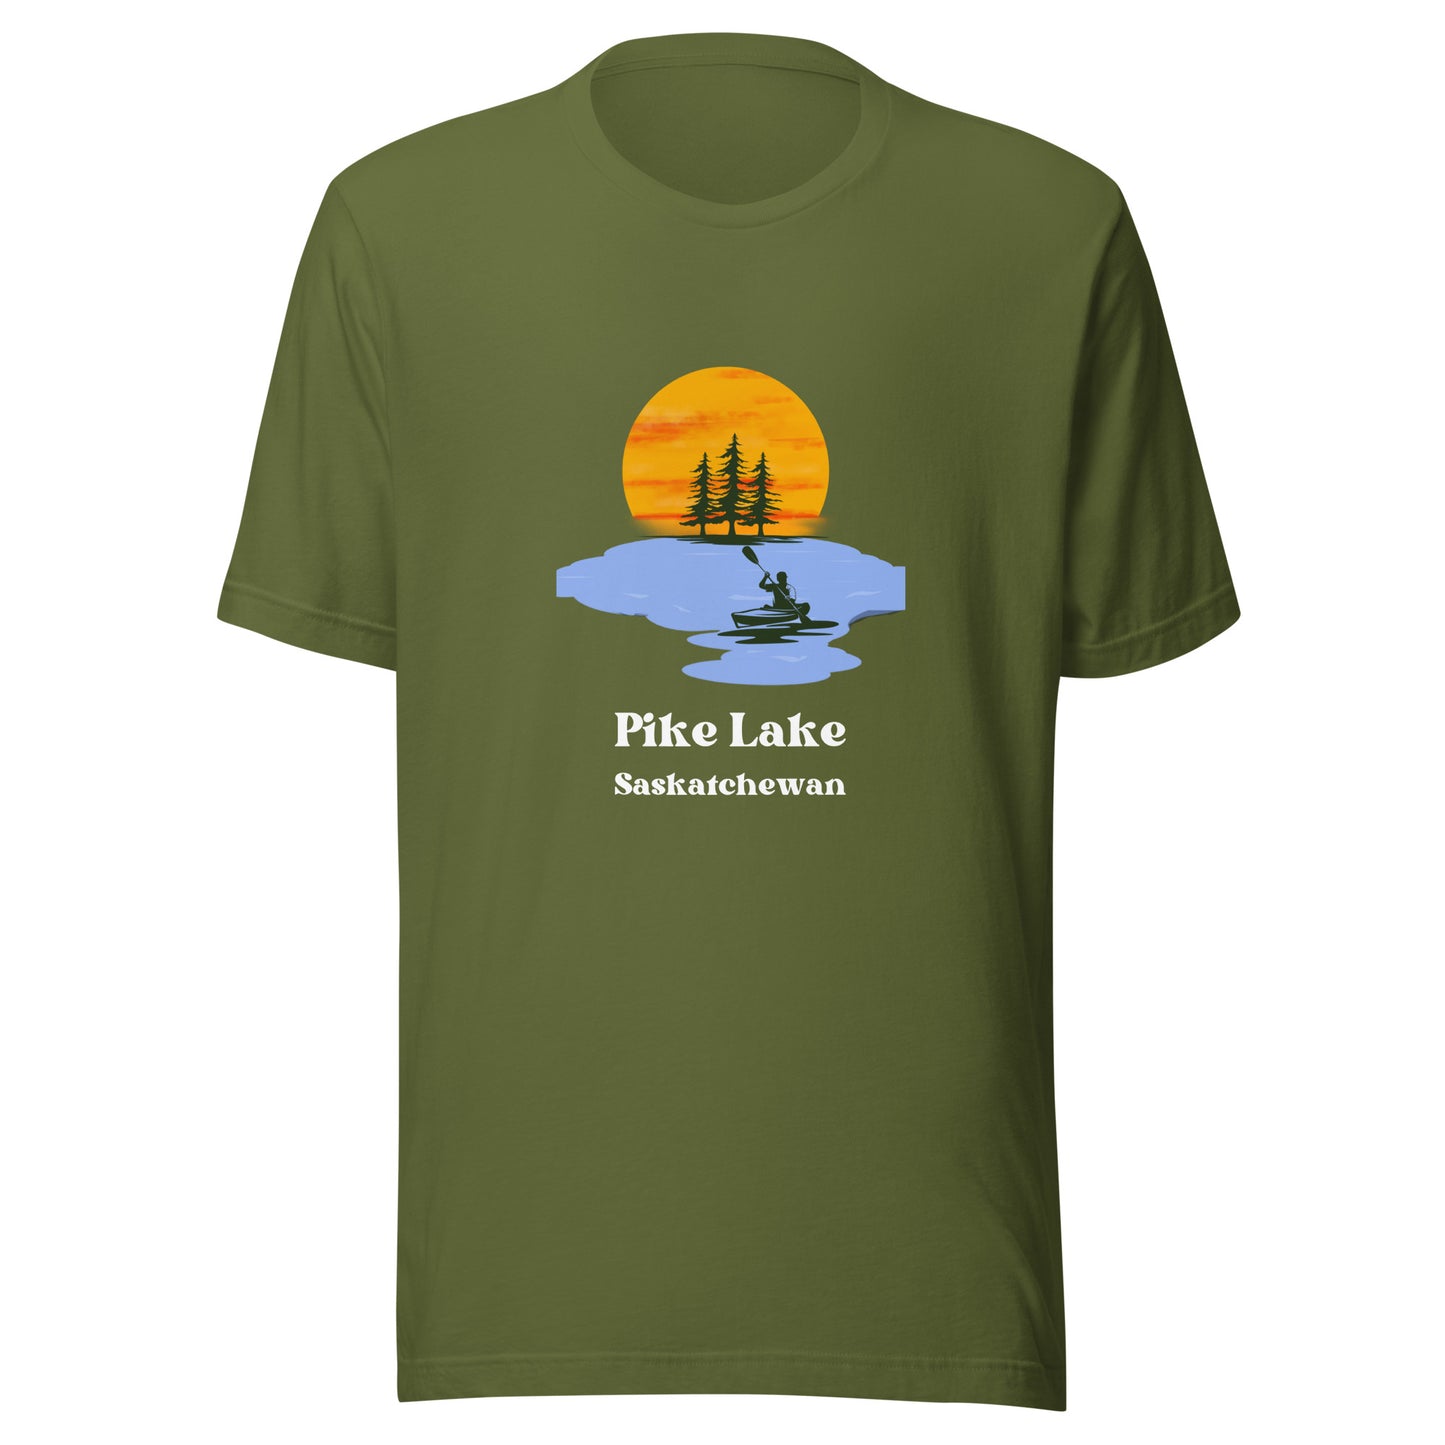 Pike Lake, SK - T-Shirt Kayak